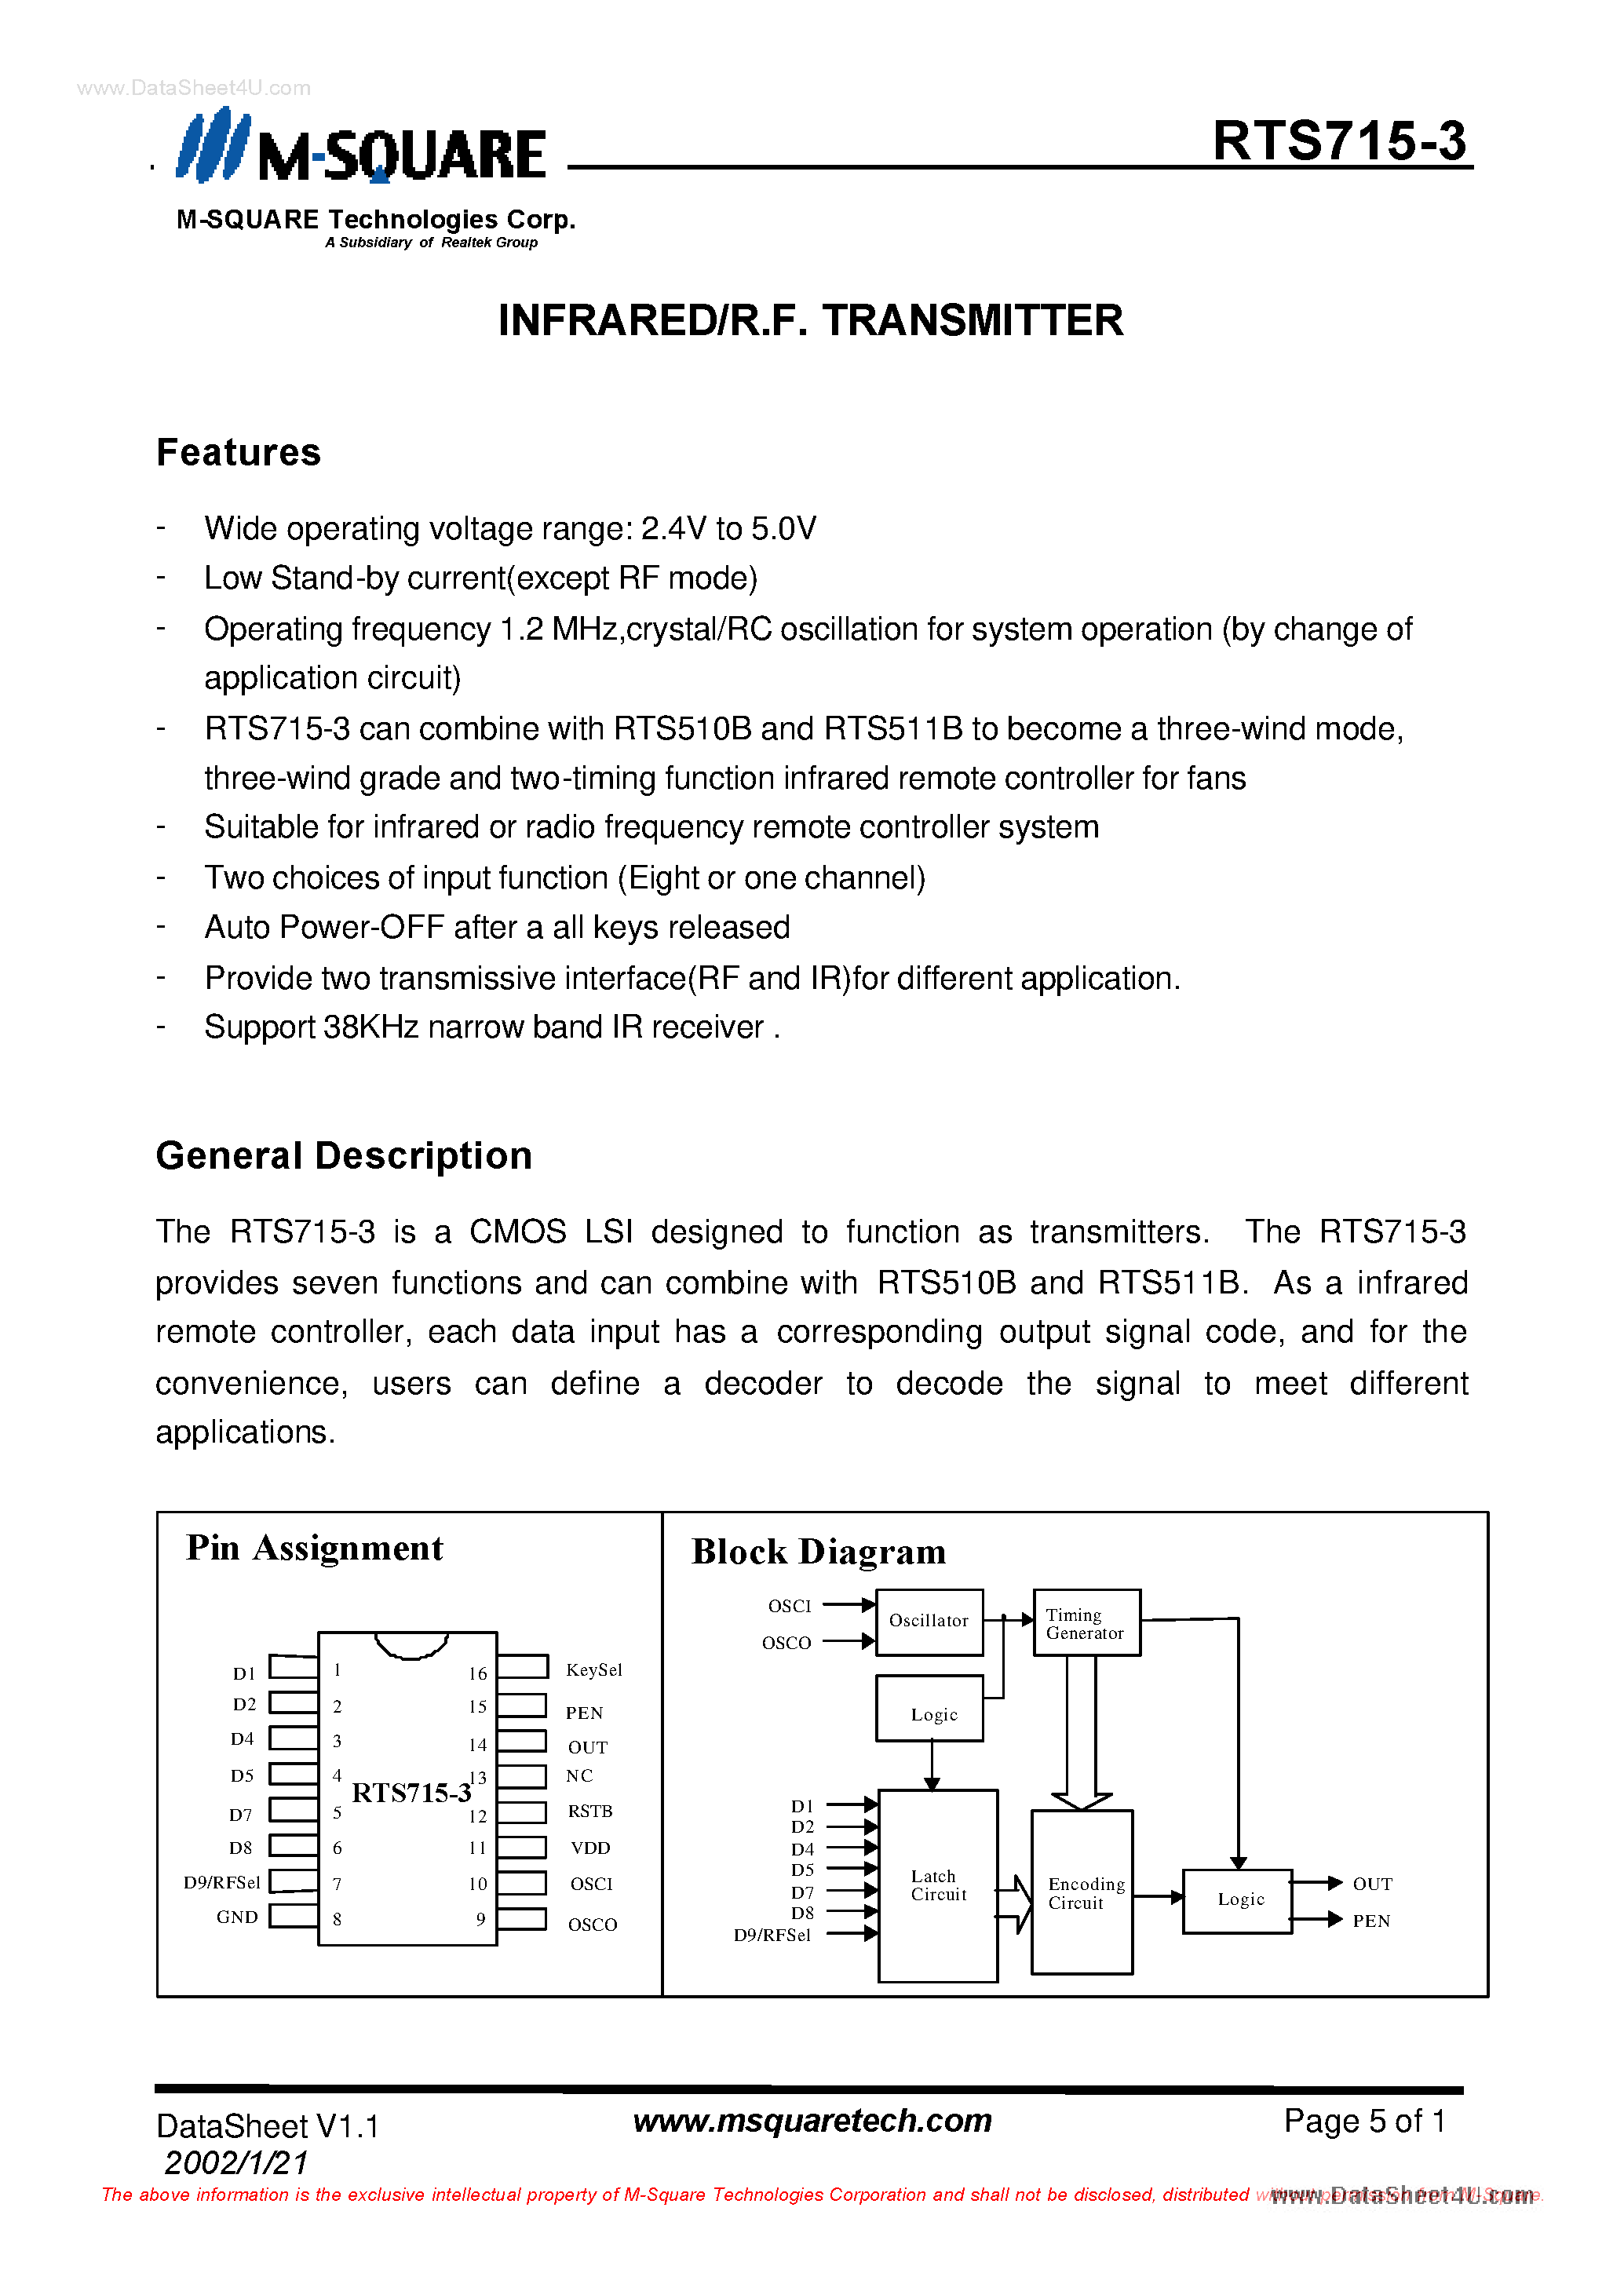 Datasheet RTS715-3 - Infrared/R.F Transmitter page 1